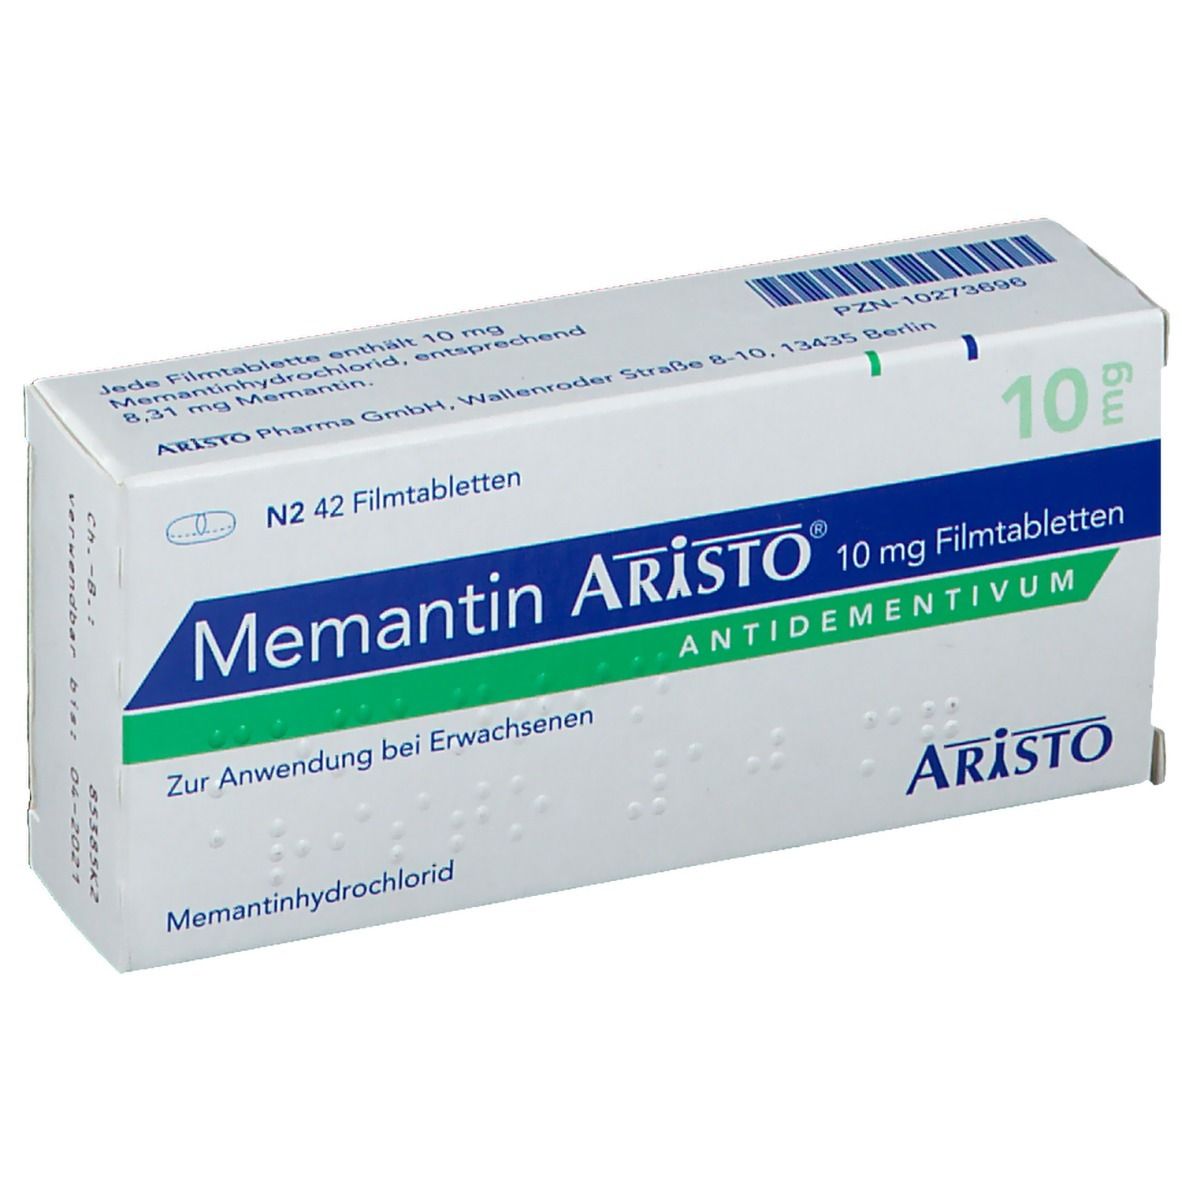 Memantin Aristo® 10 mg